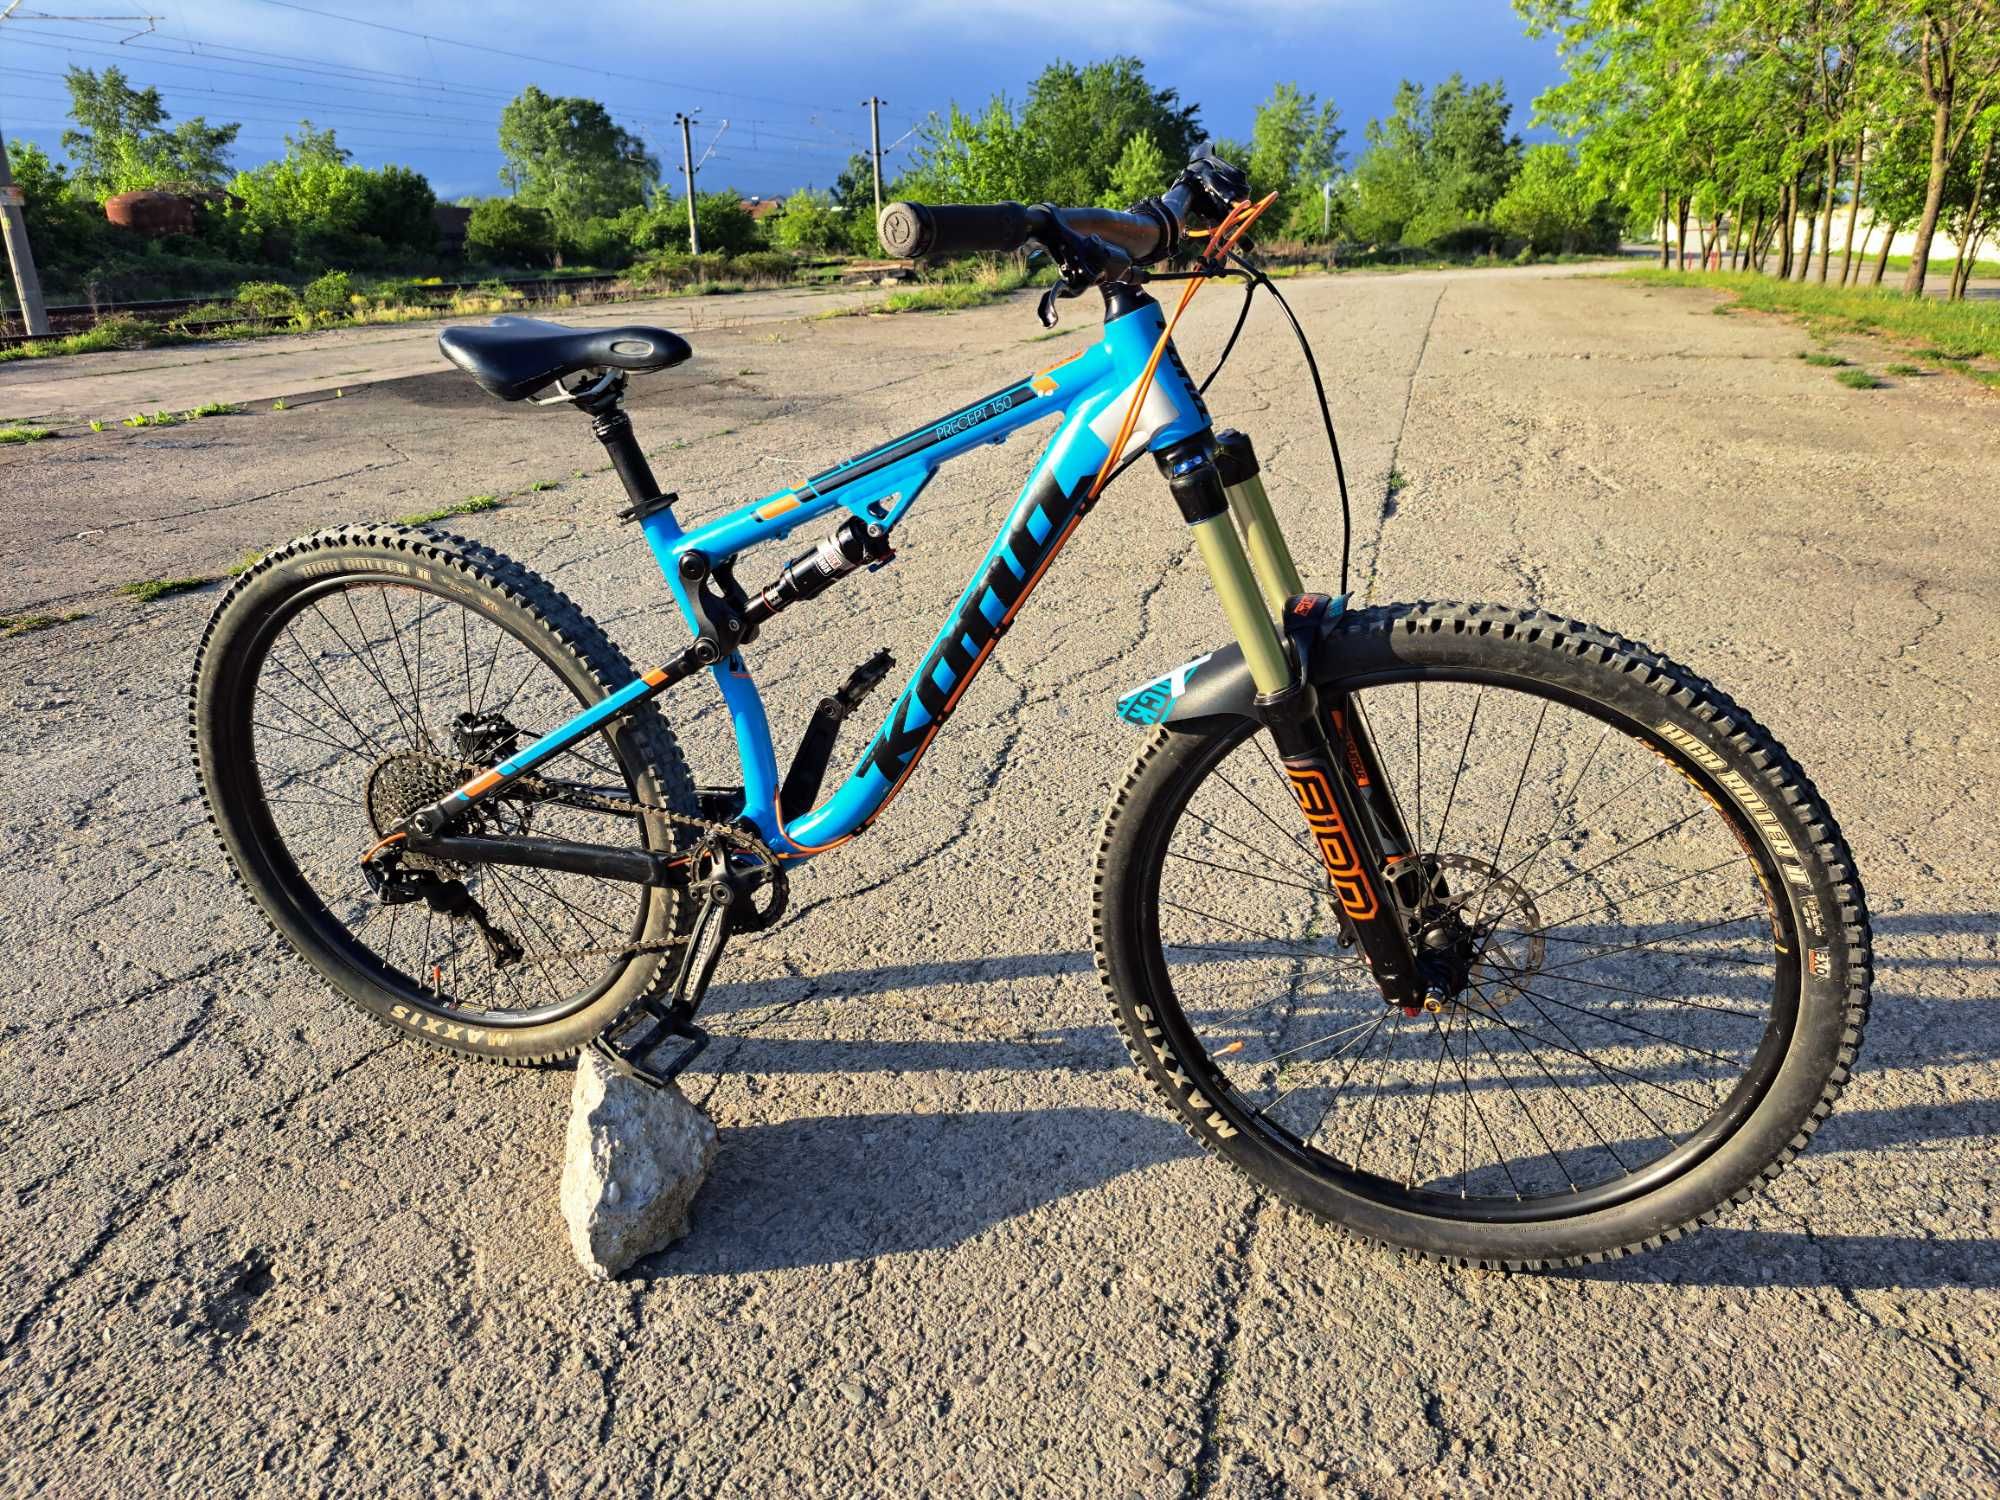 Bicicleta KONA PRECEPT 150 27.5 FullSuspension/Enduro/Downhill/Trial